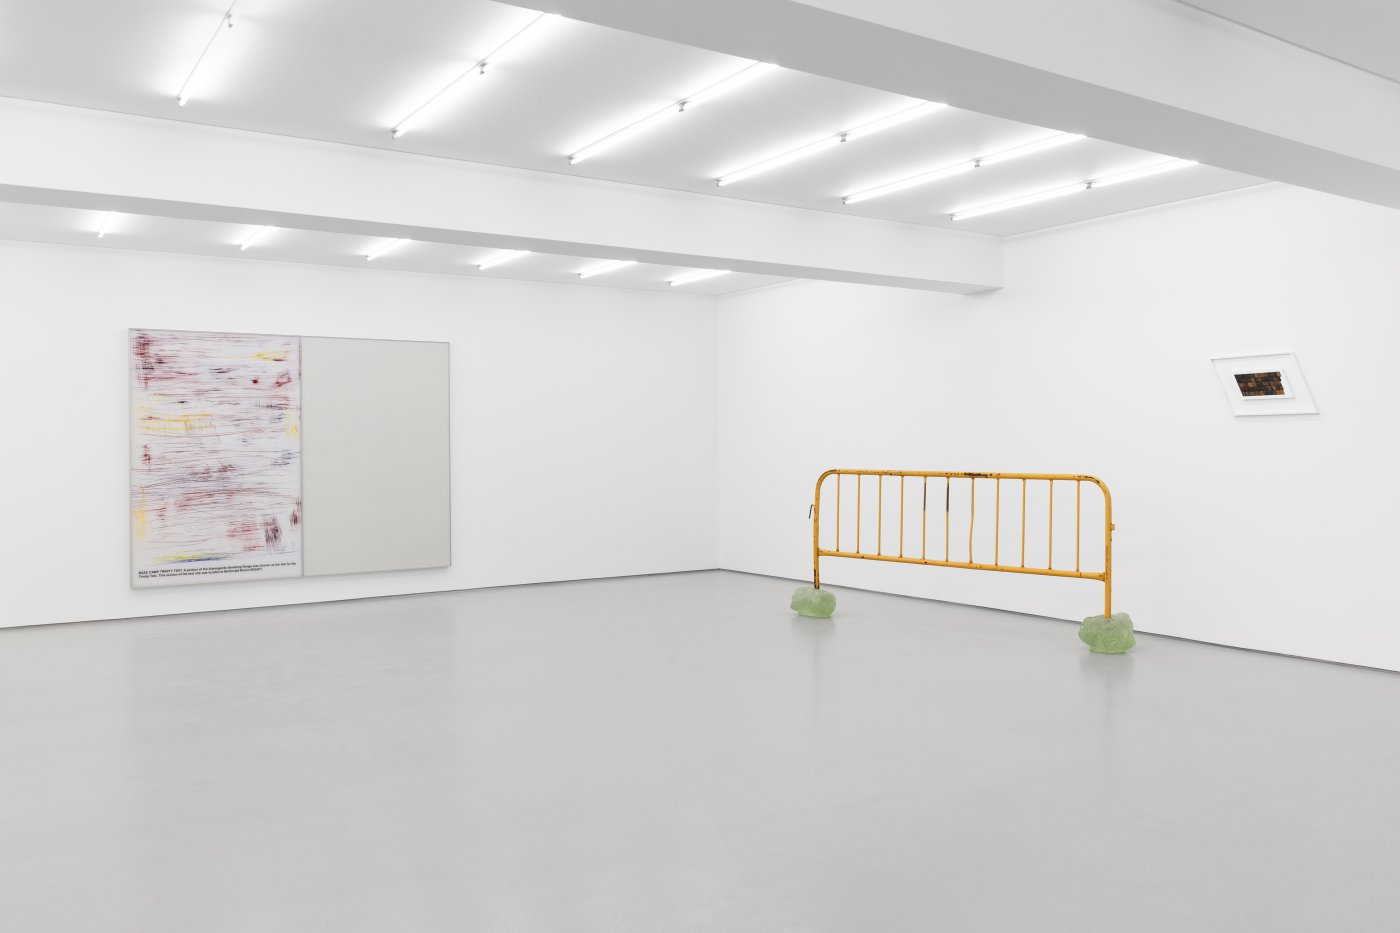 Exhibition view: THYLACINUS CYNOCEPHALUS, João Louro, Galeria Vera Cortês, 2022
